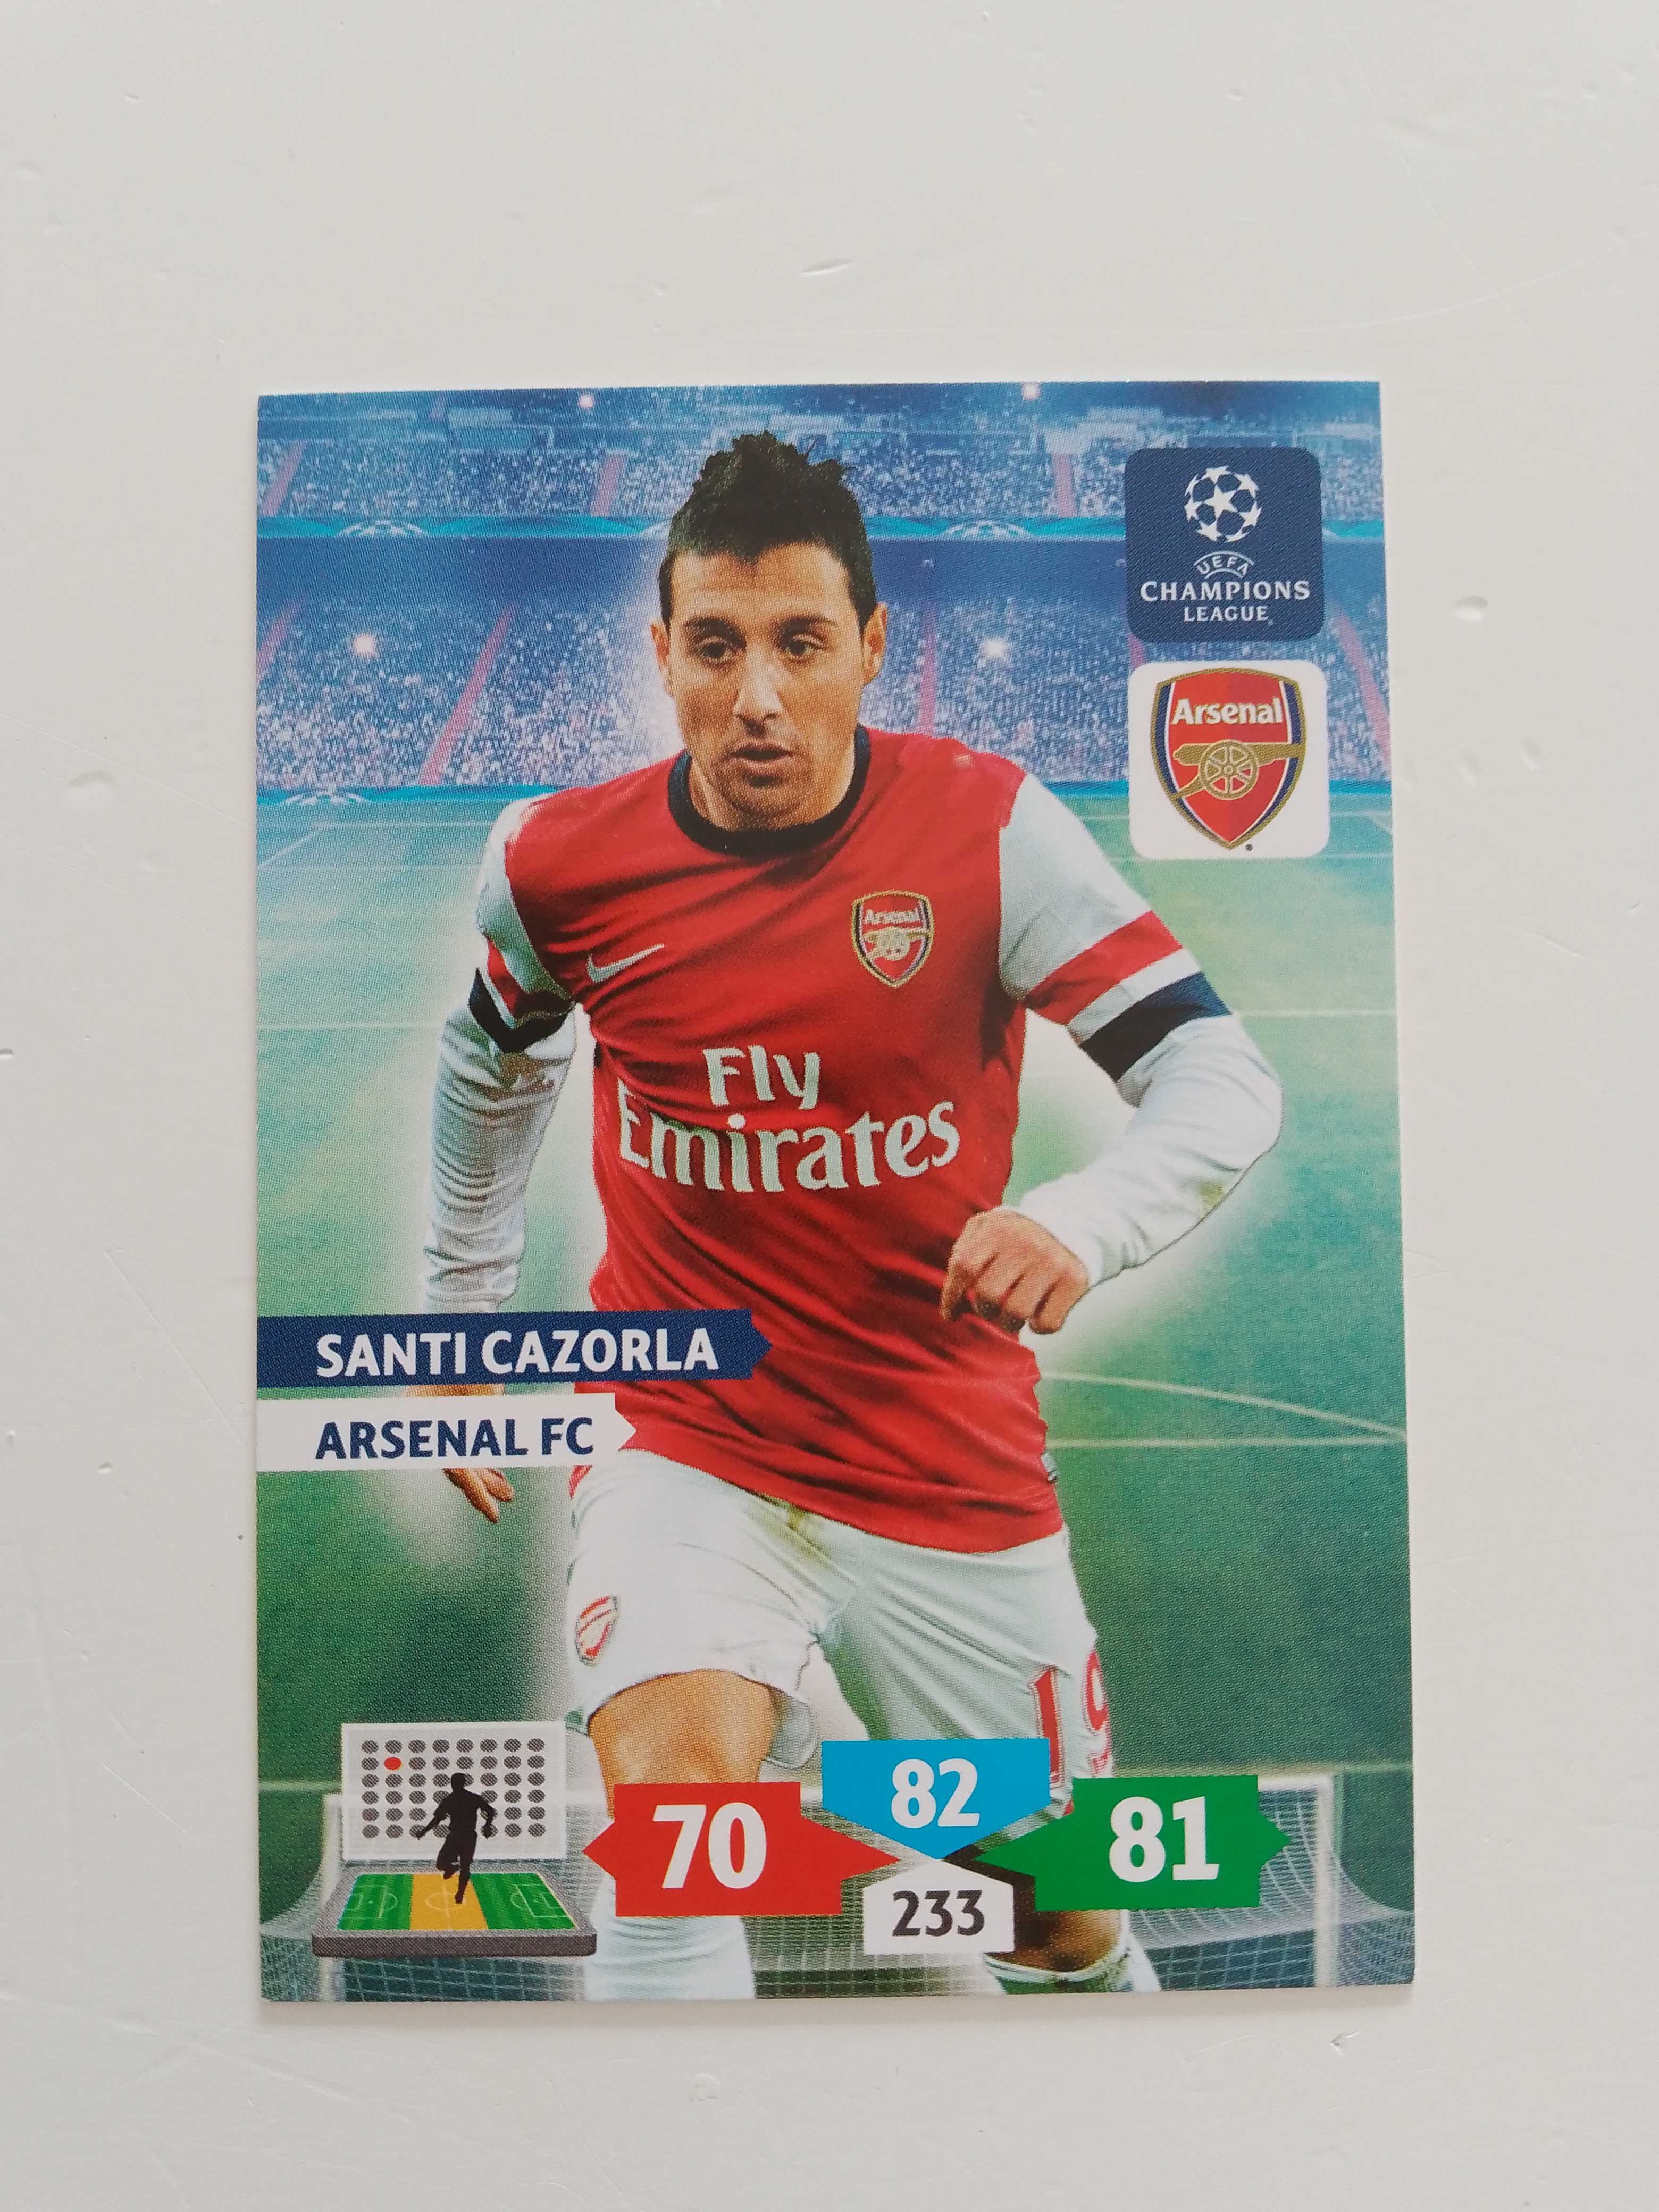 Santi Cazorla (Base card) Arsenal FC Champions League 2013/14